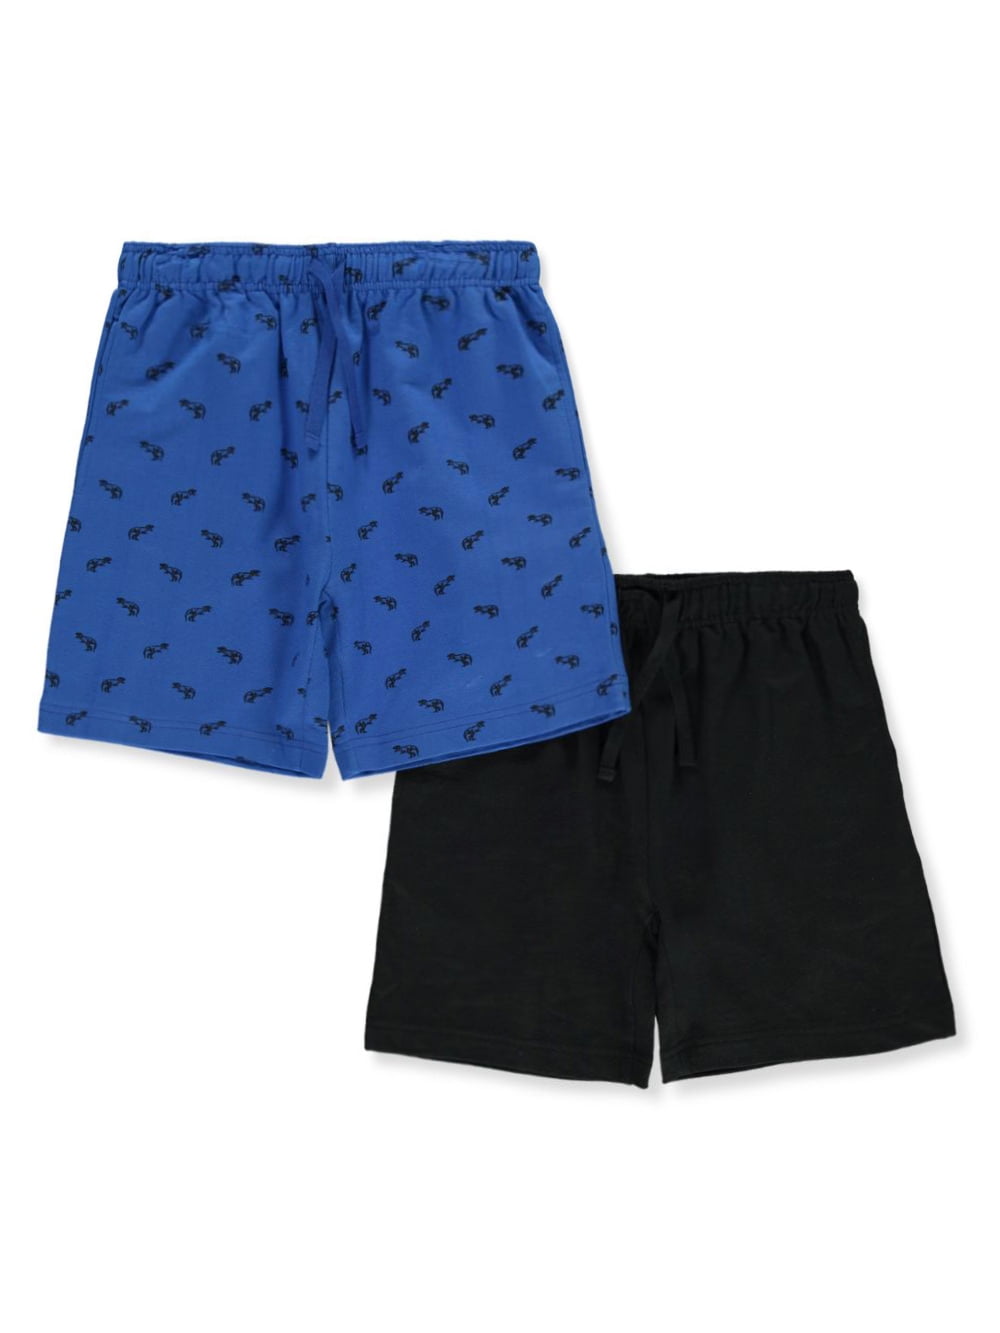 Black/Light Grey Essentials Toddler Boys 2-Pack Basketball Mesh Shorts 3T 